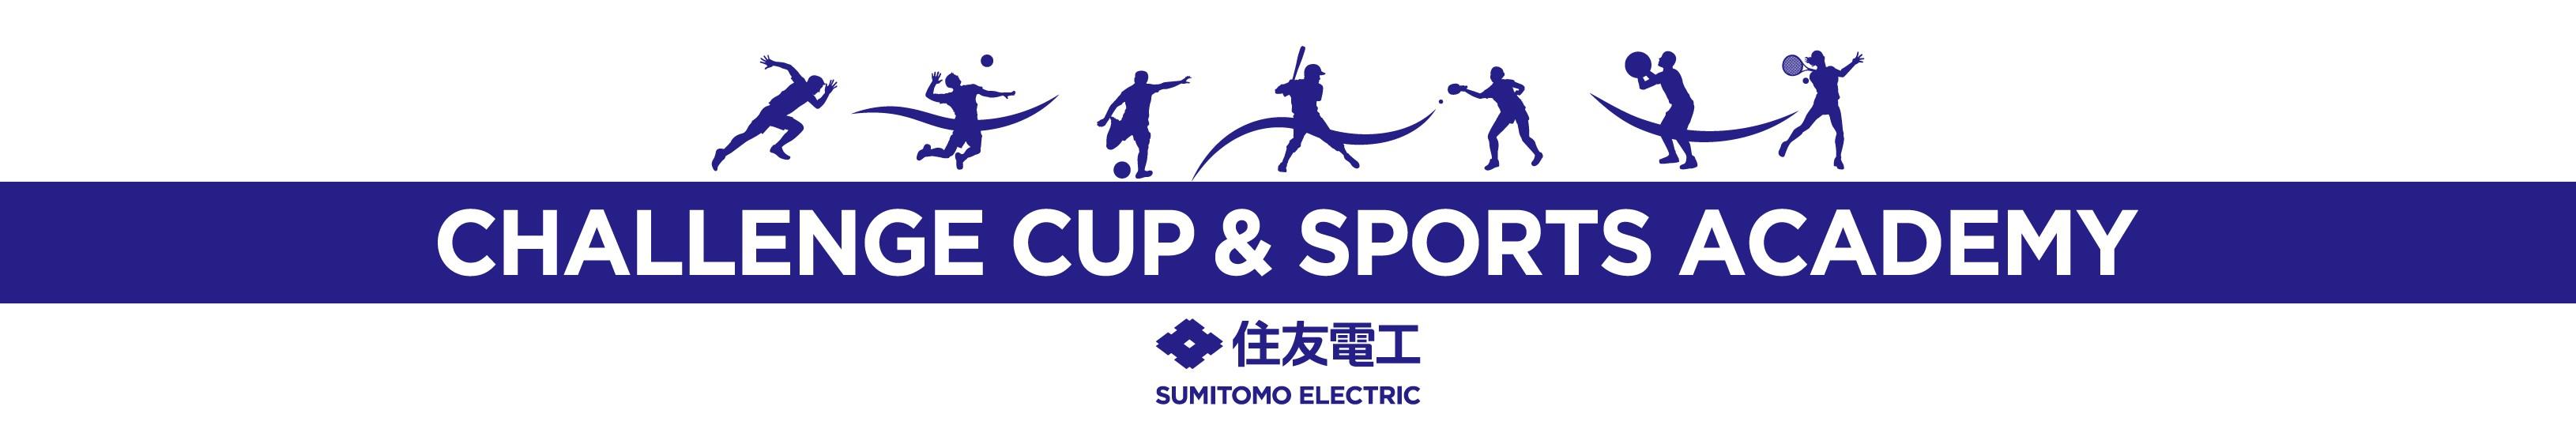 SEI Challenge Cup logo